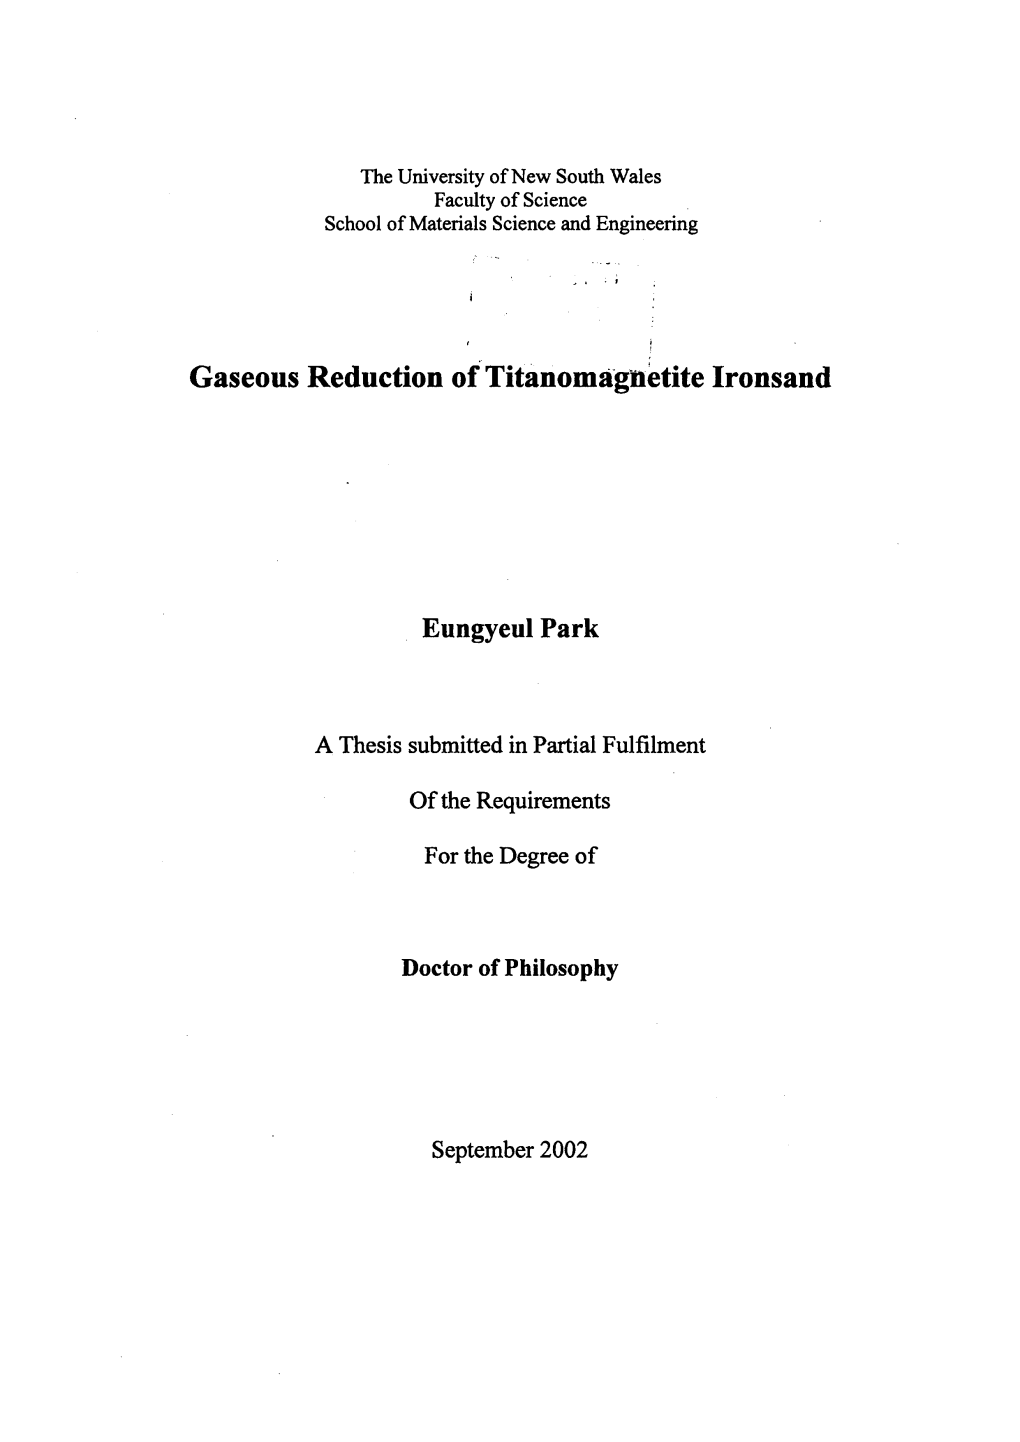 Gaseous Reduction of Titanomagnetite Ironsand